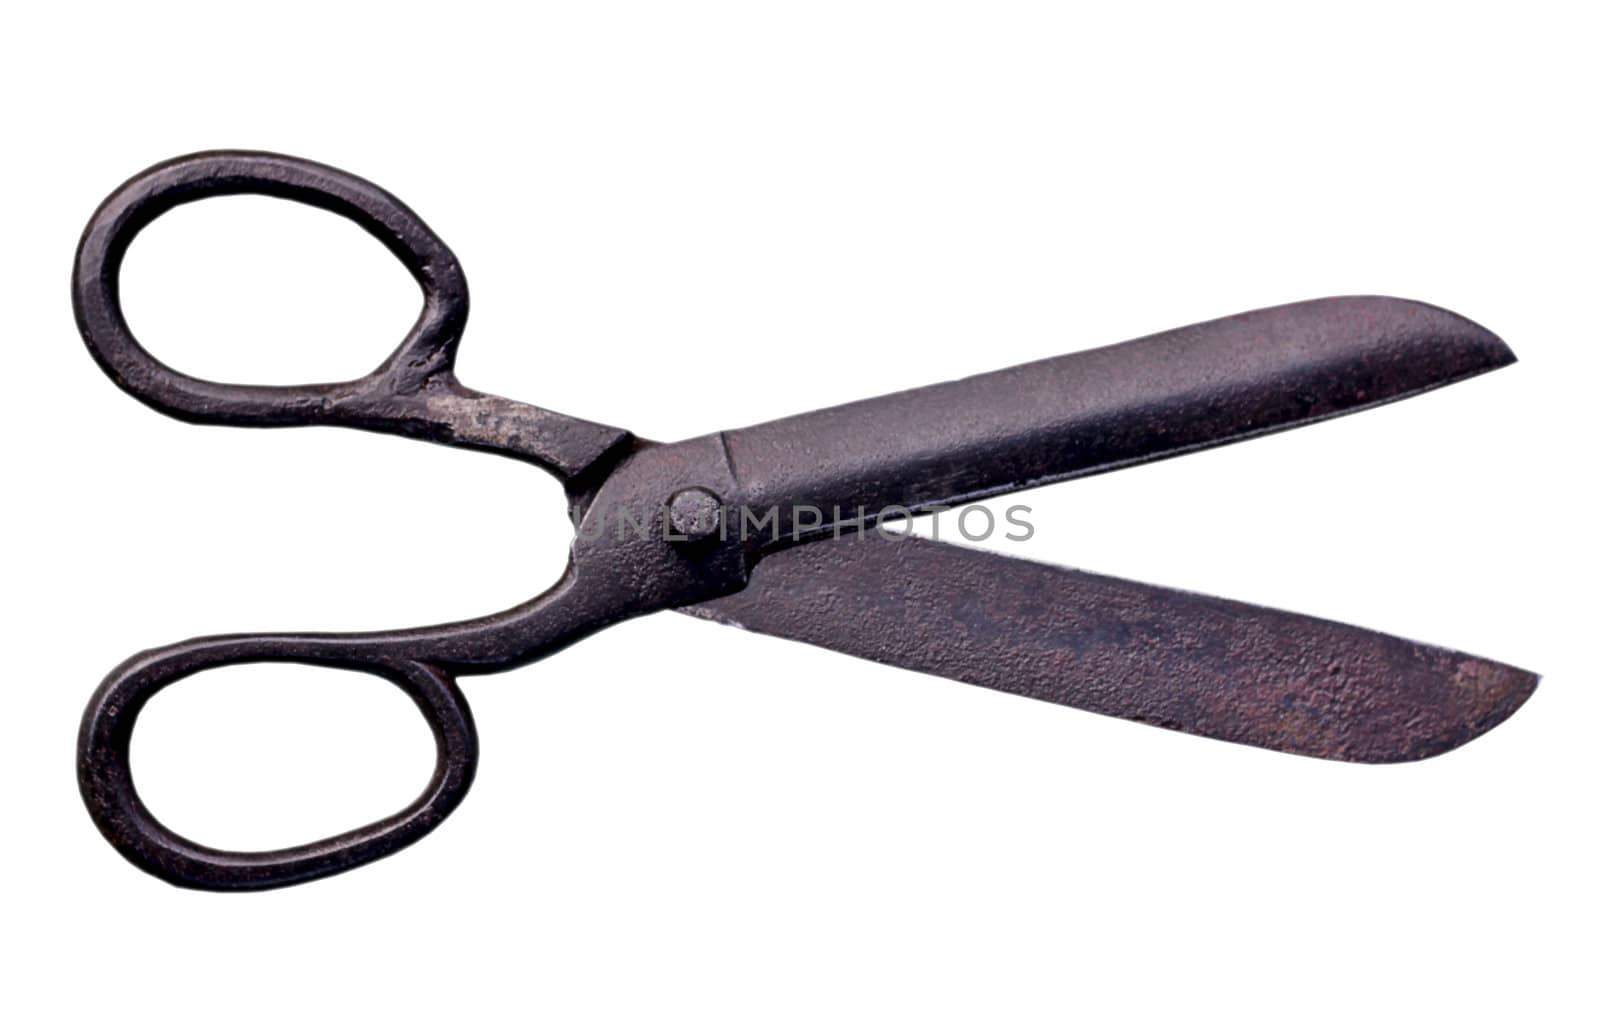 Old scissors by chuckyq1